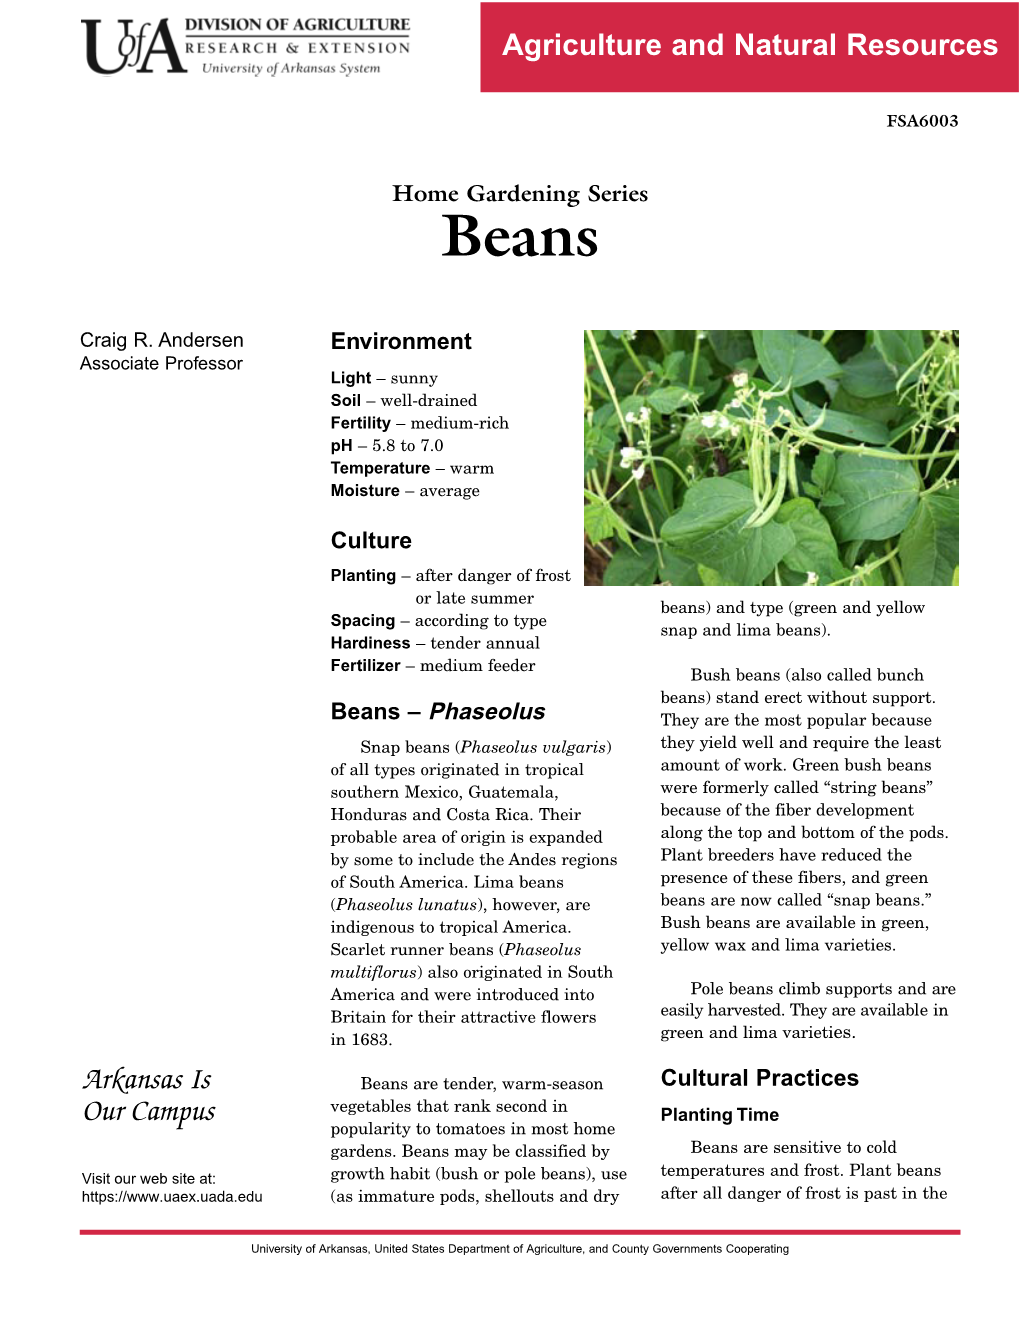 Beans (Home Gardening Series)